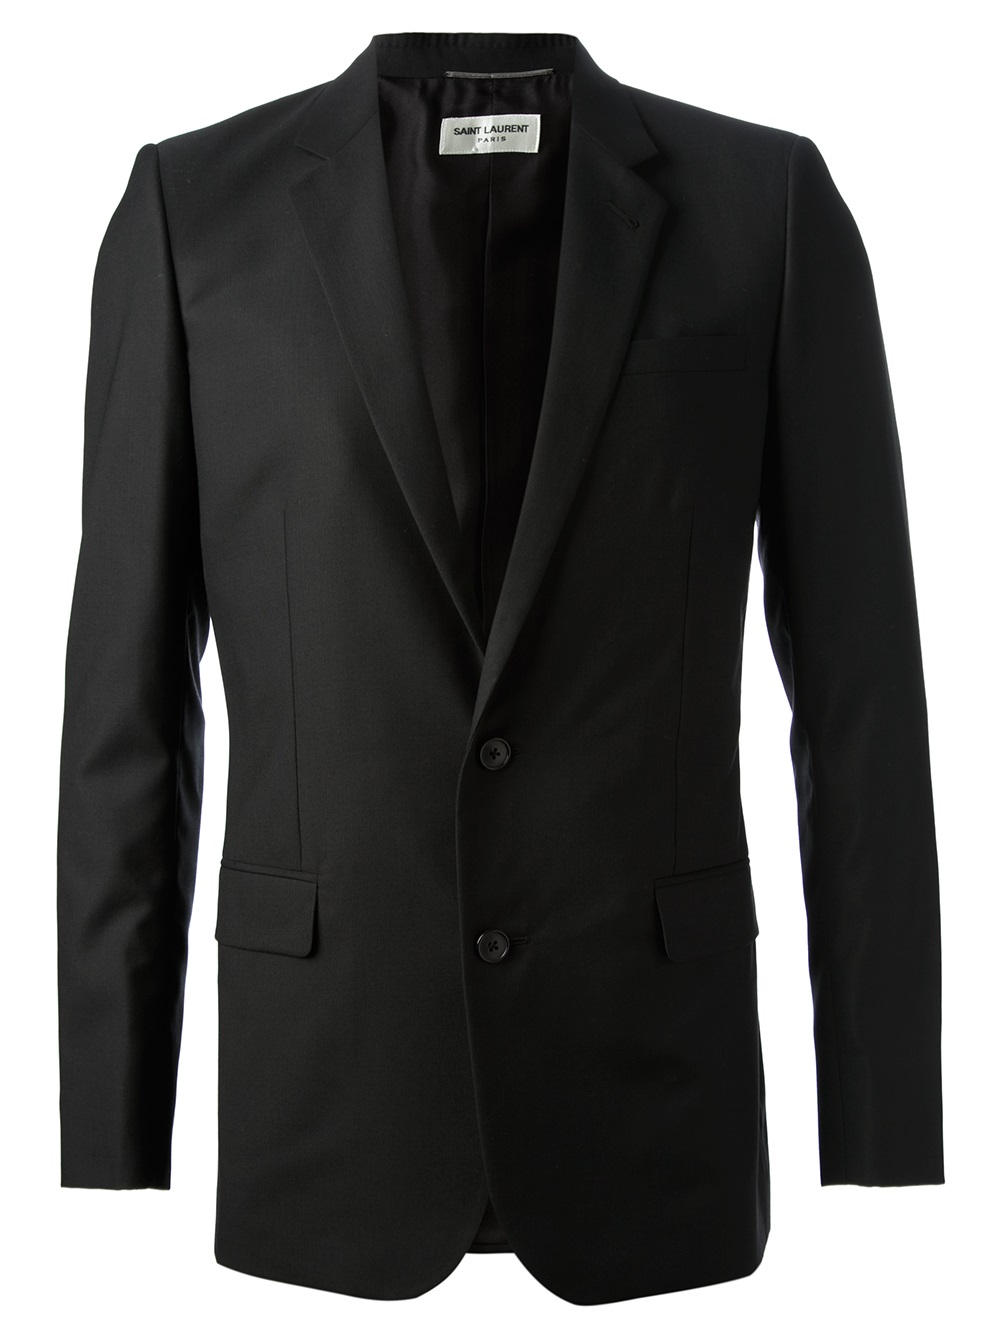 Lyst - Saint Laurent Button Up Jacket in Black for Men